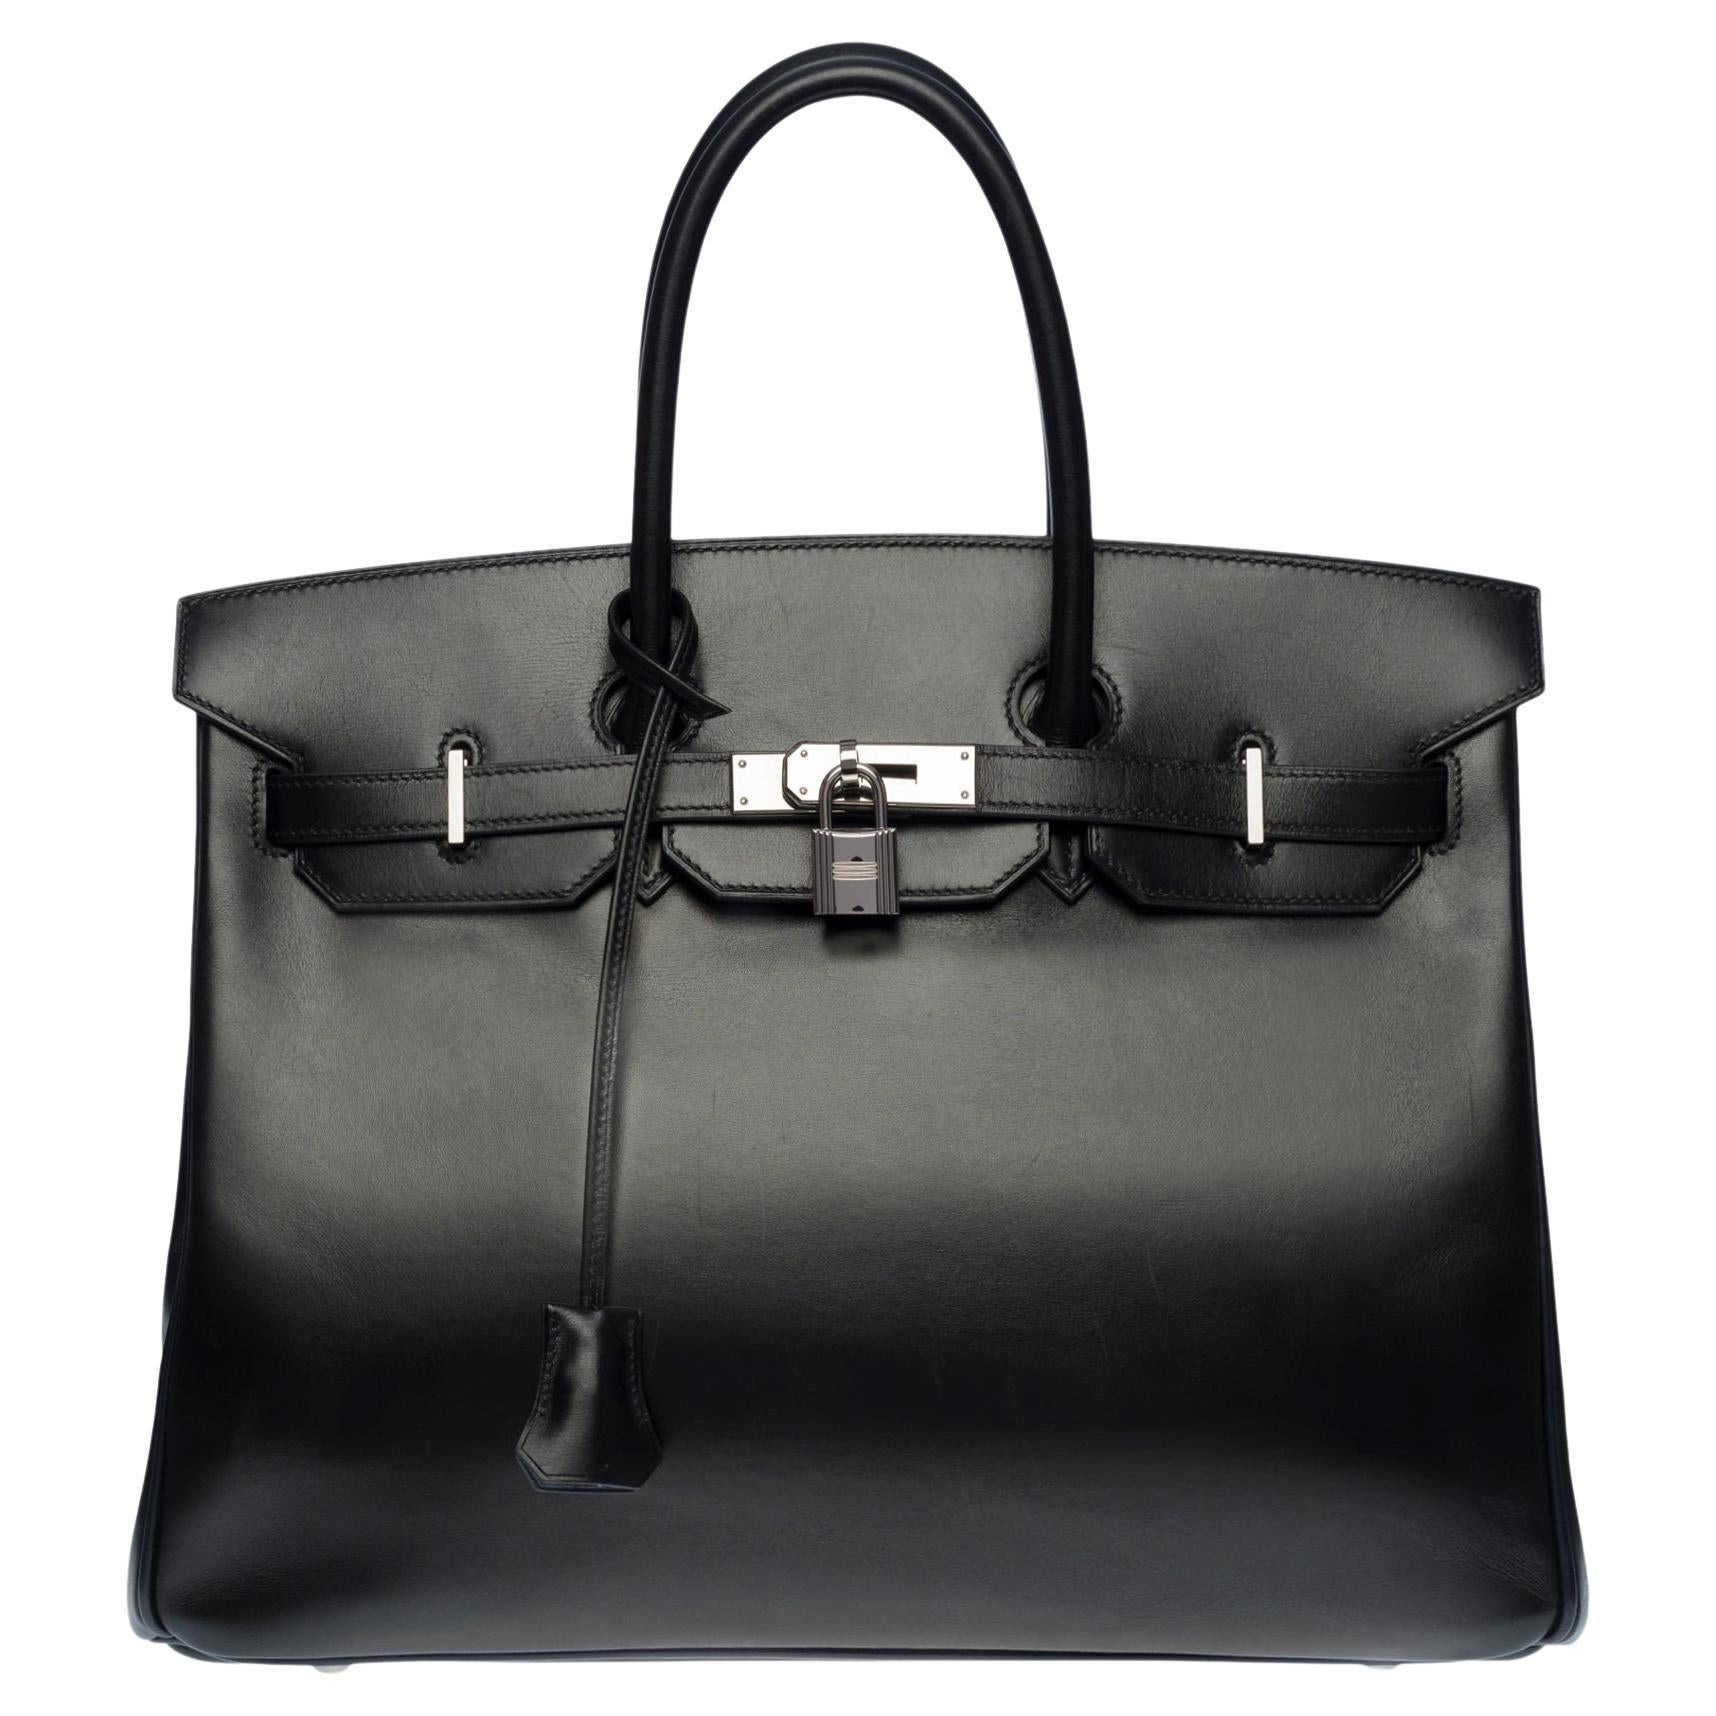 Amazing & Rare Hermès Birkin 35 handbag in black box calfskin leather, SHW